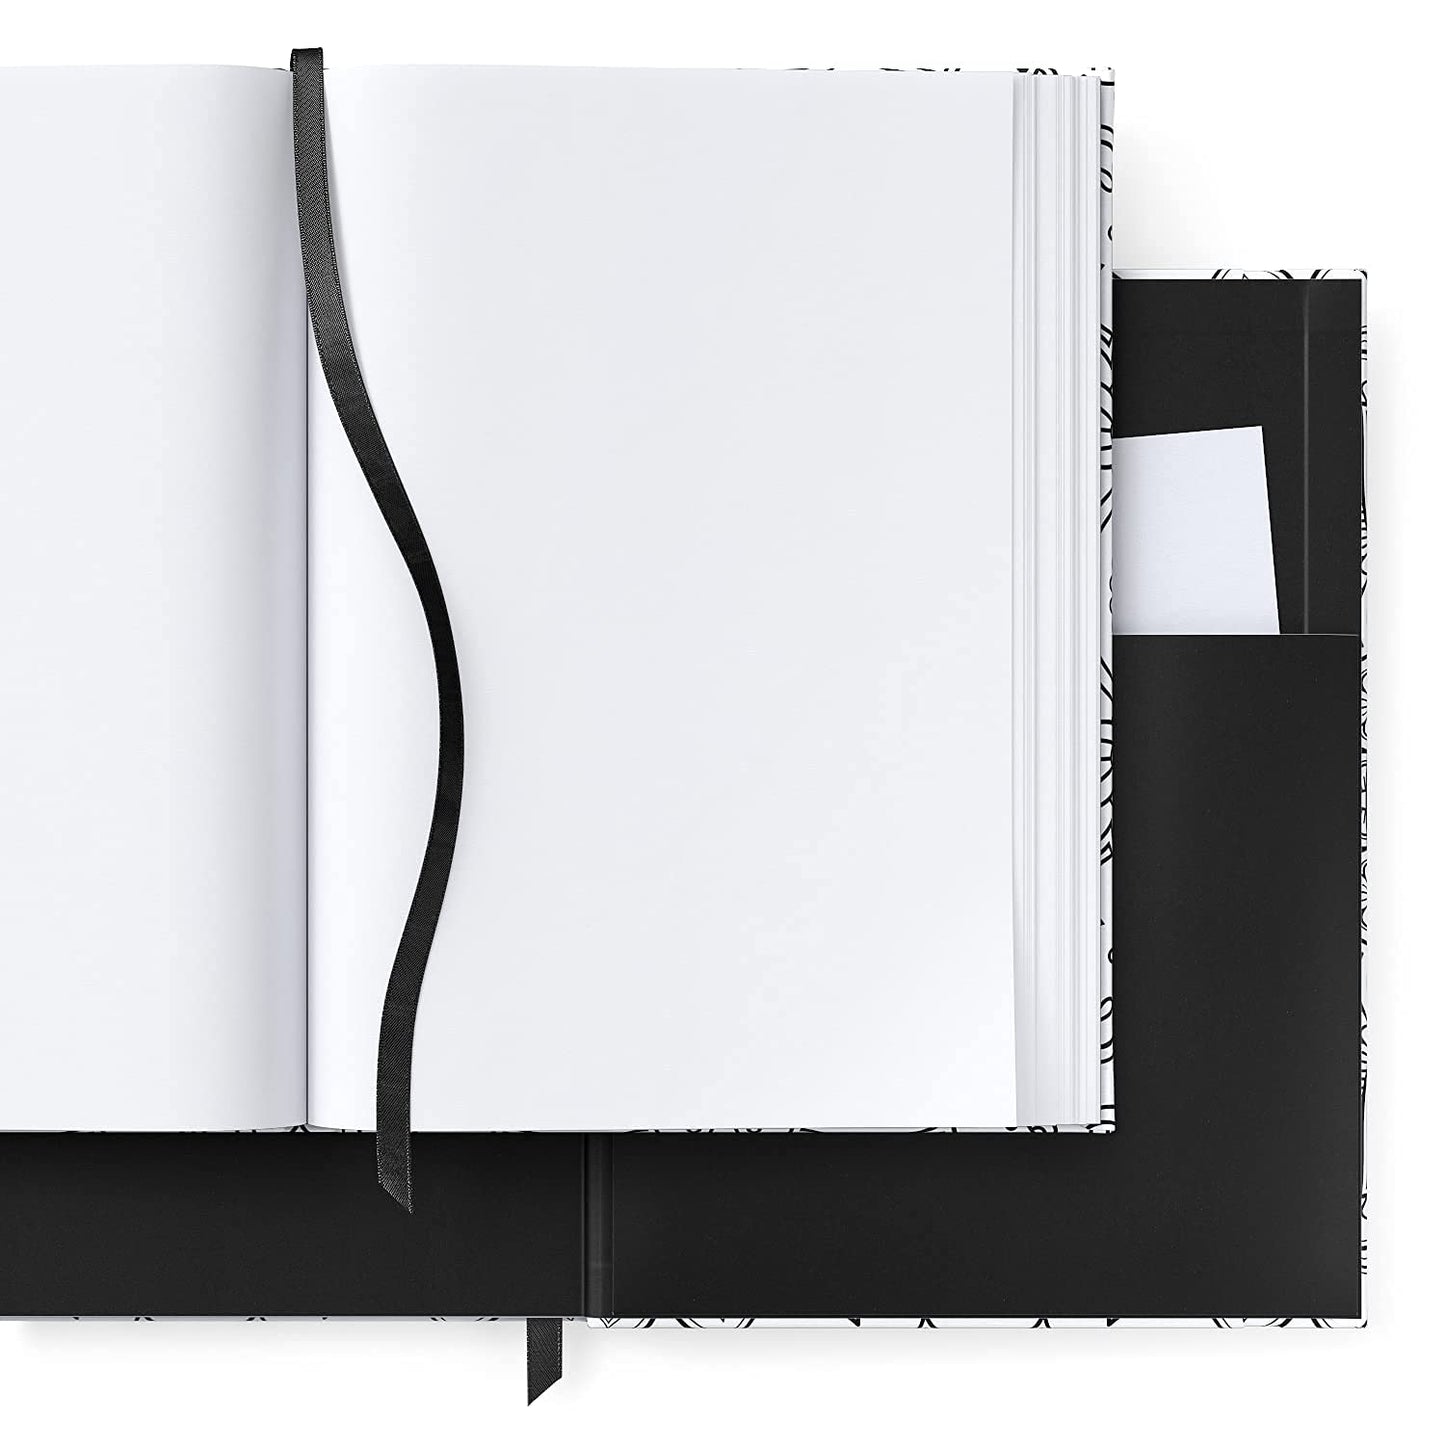 Arteza Blank Journals, Mandala Design - Set of 2